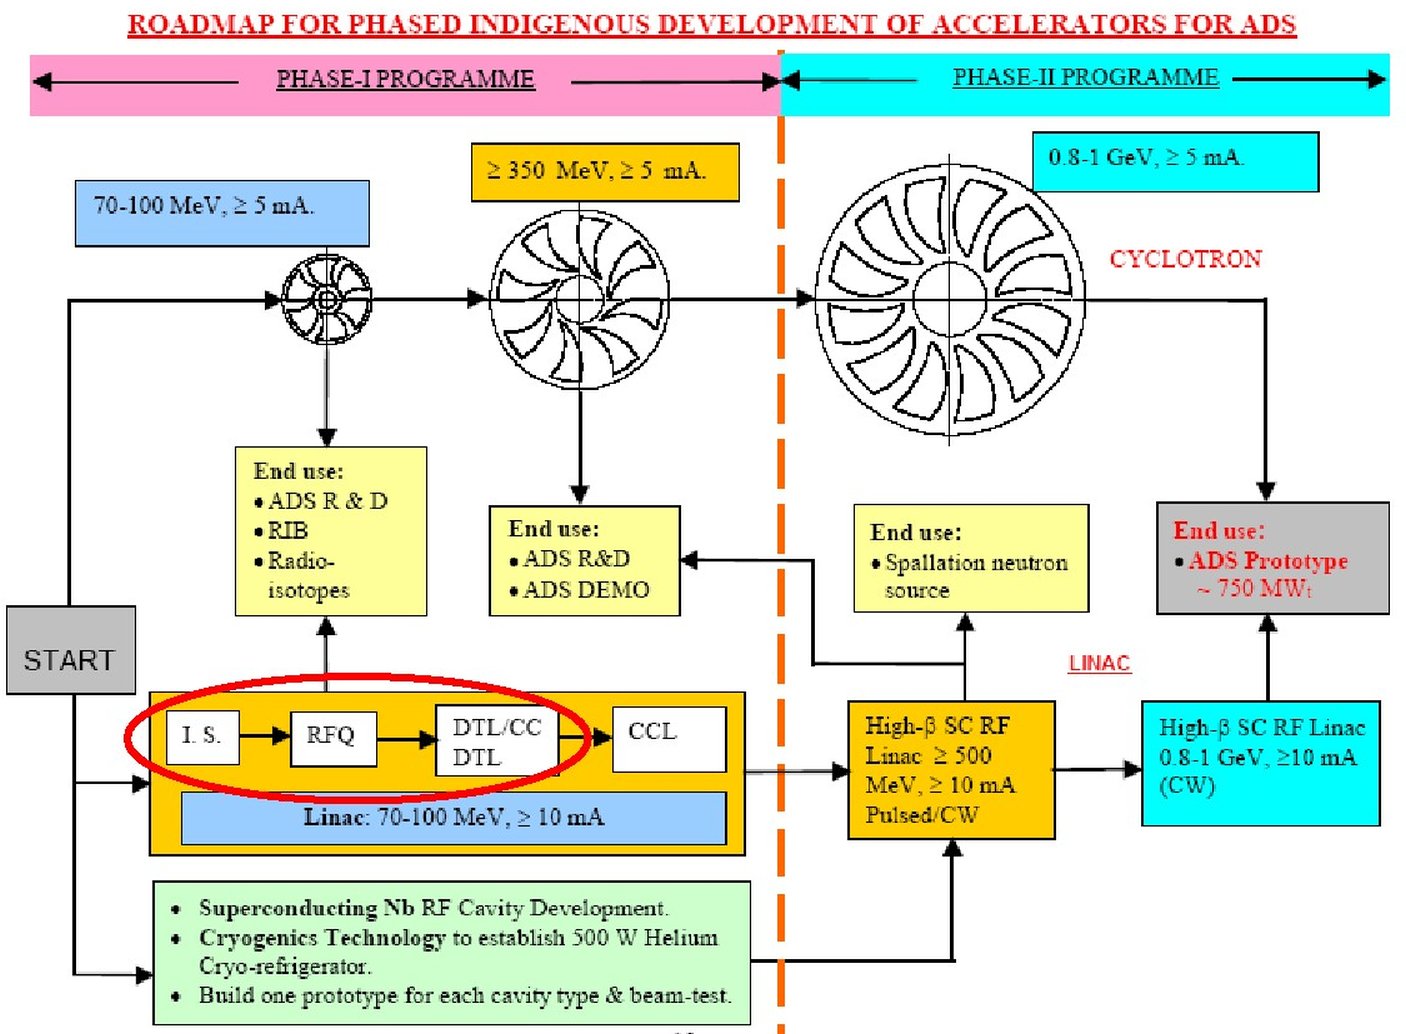 Neutron Accelerator Development Roadmap - Indian ADS Reactor Programme - 01